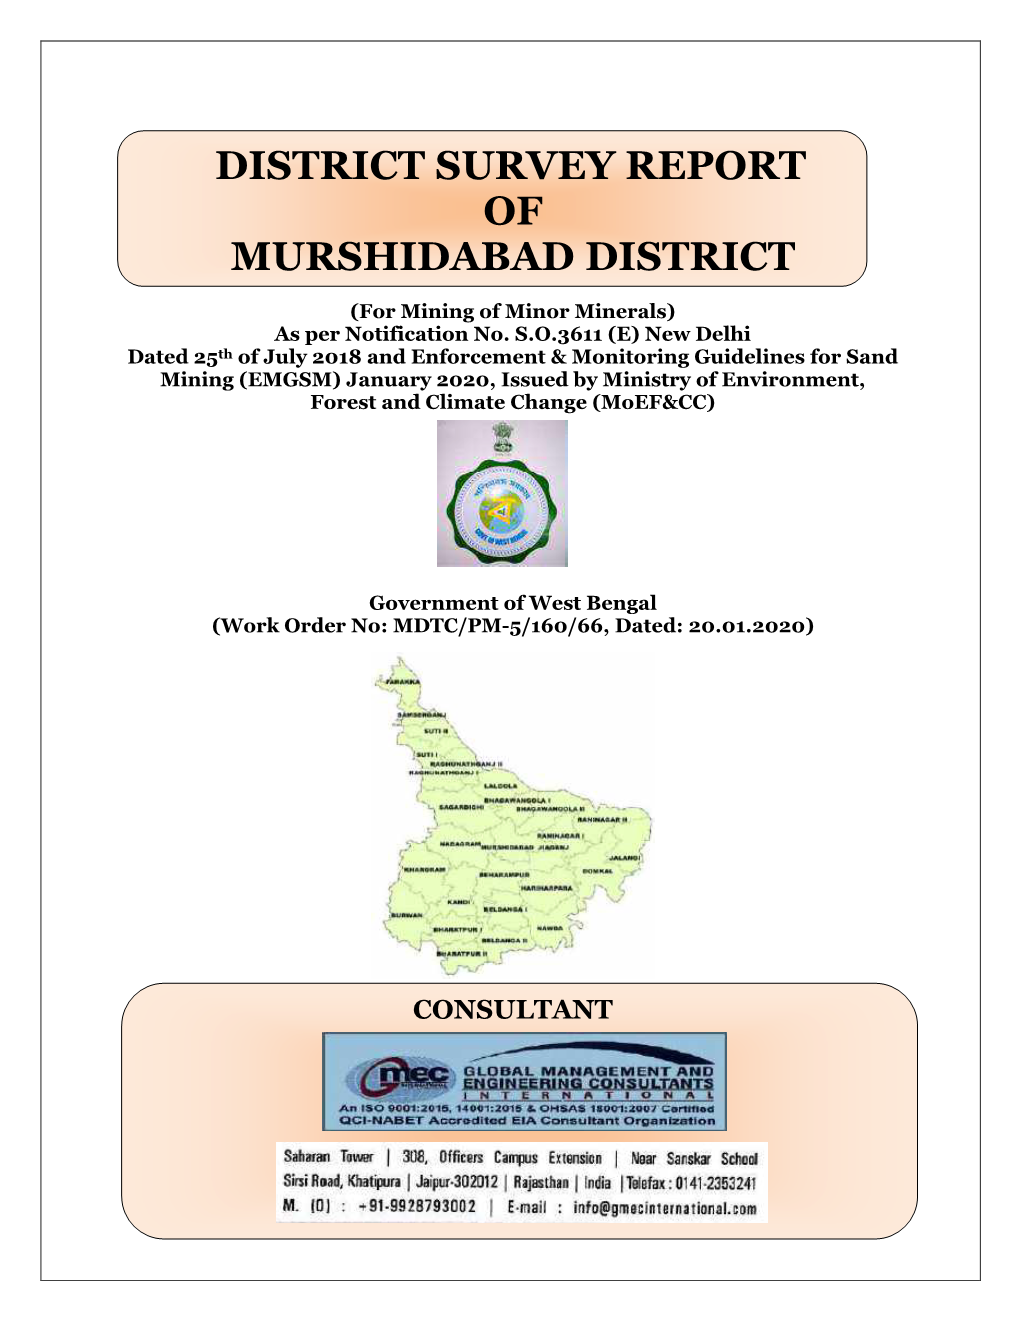 District Survey Report of Murshidabad District